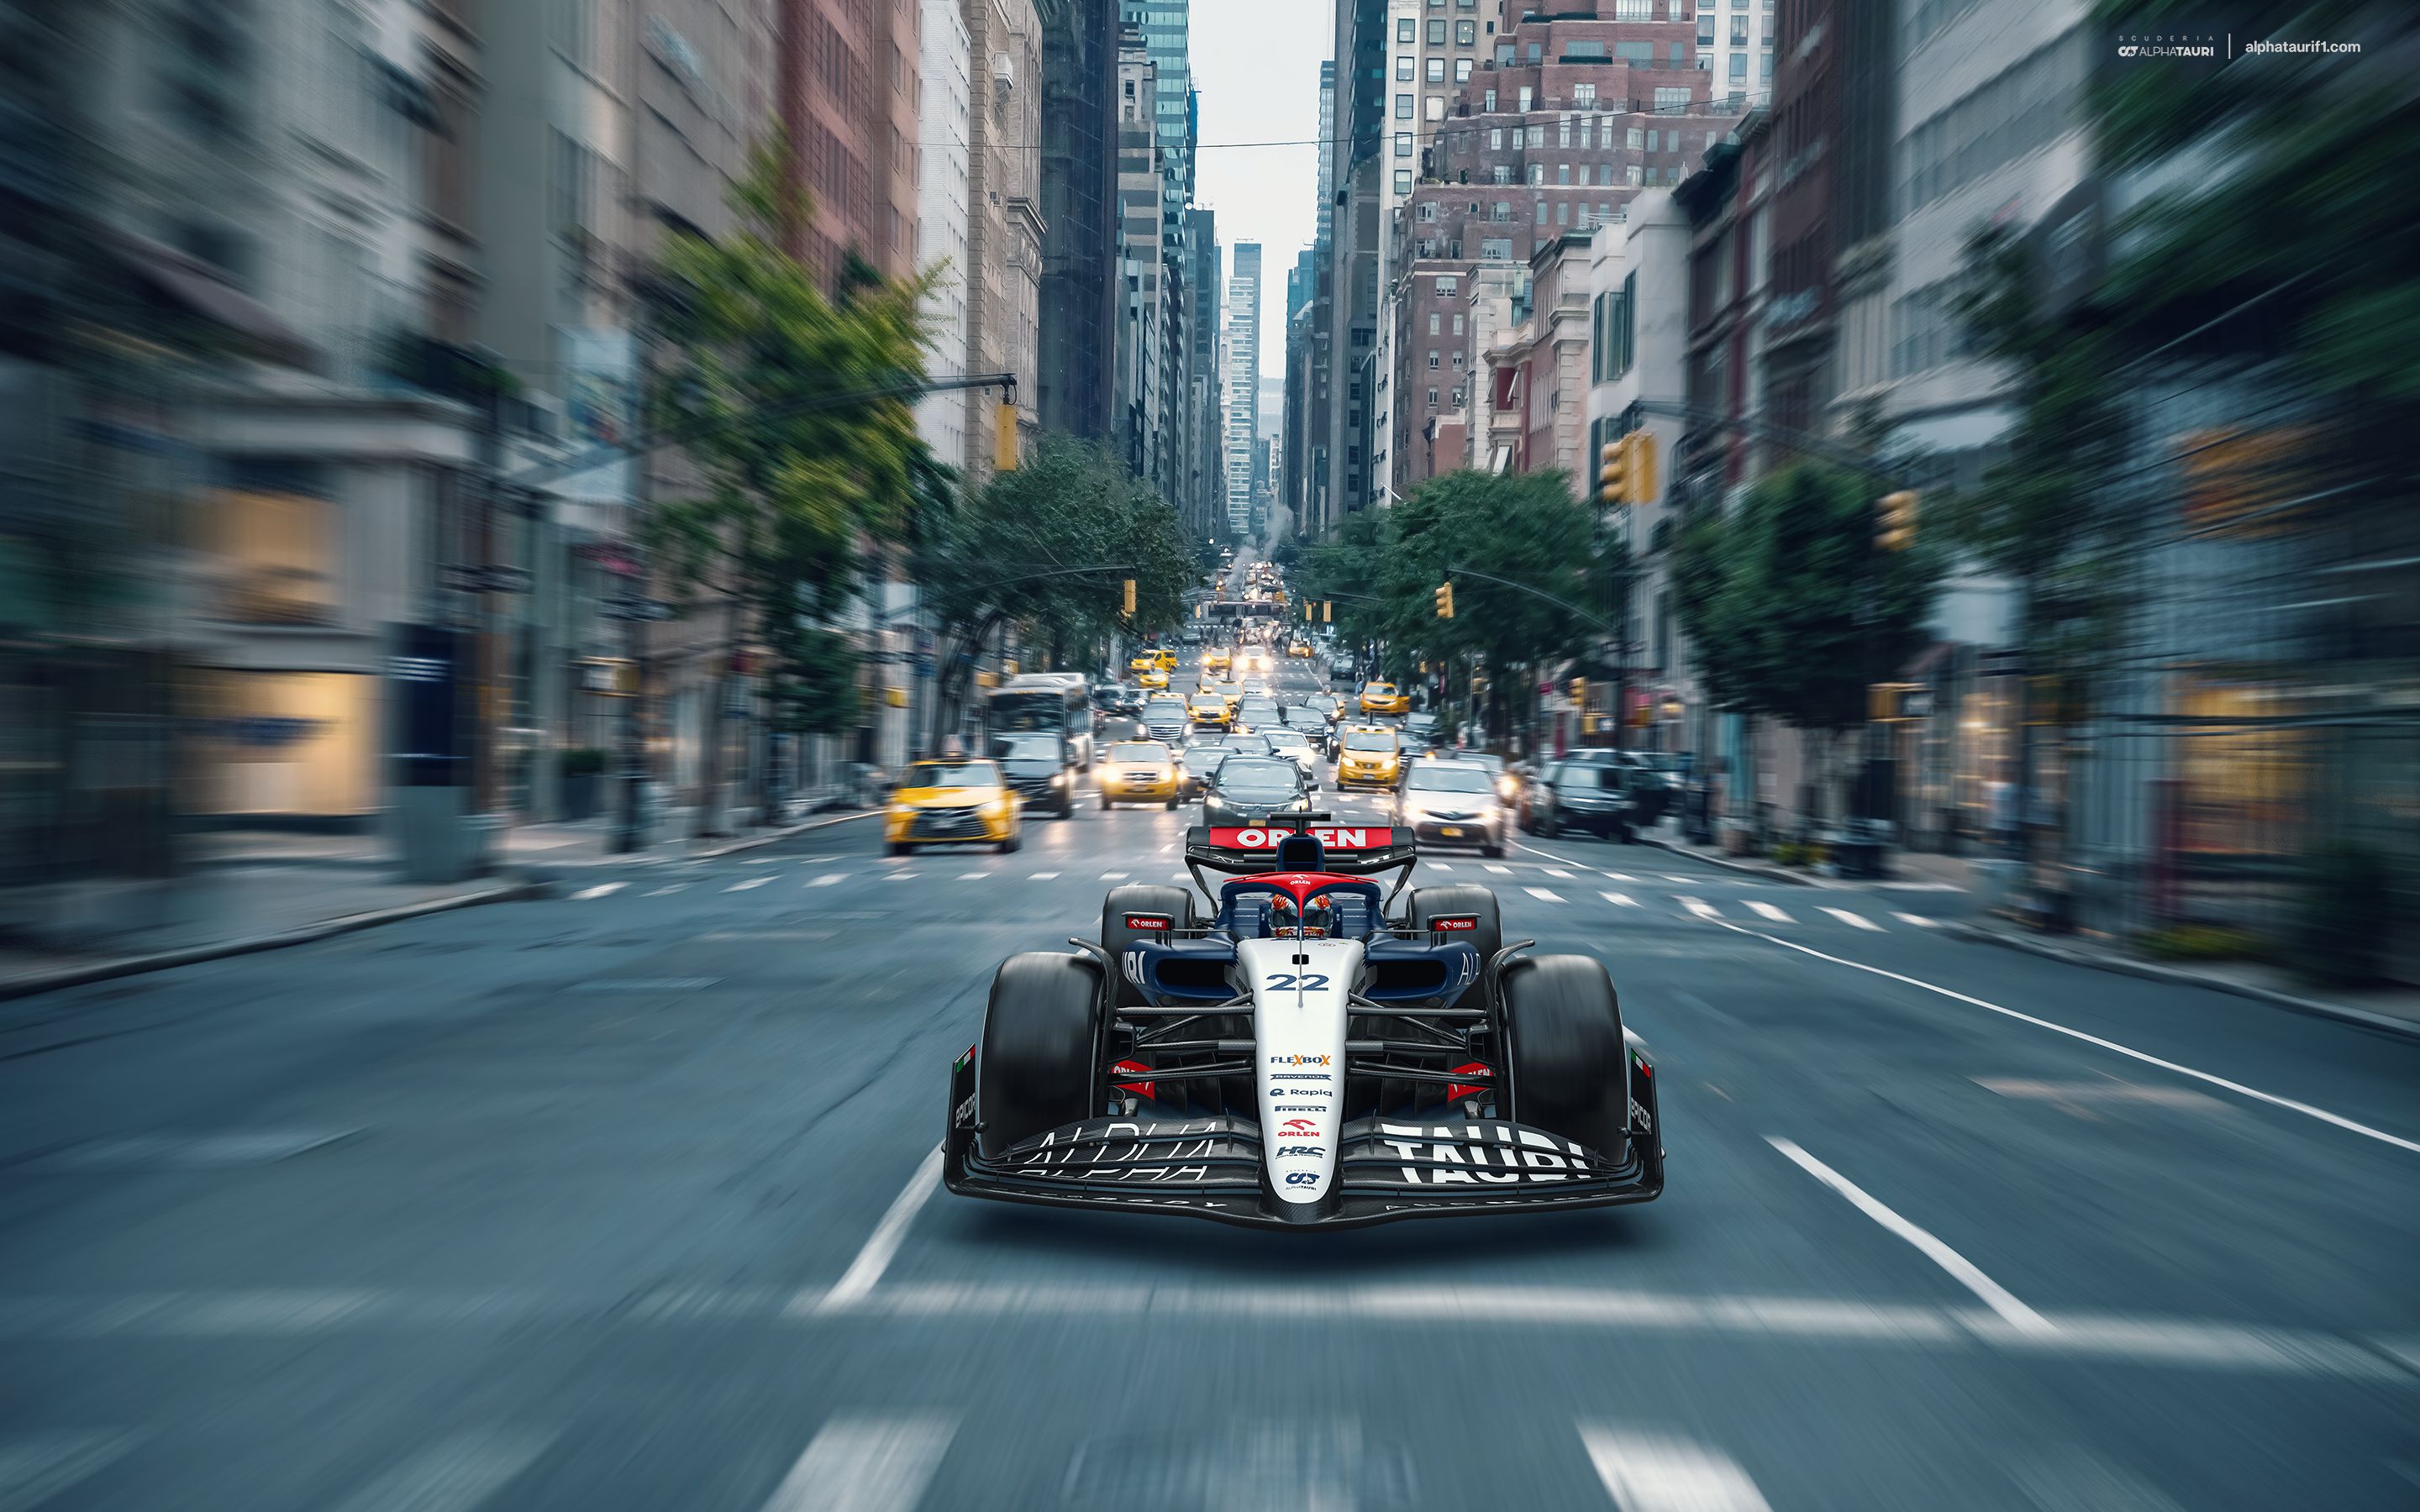 Formula 1 Formula Cars Race Cars Scuderia AlphaTauri New York City Car Front Angle View Road City Bu 2880x1800